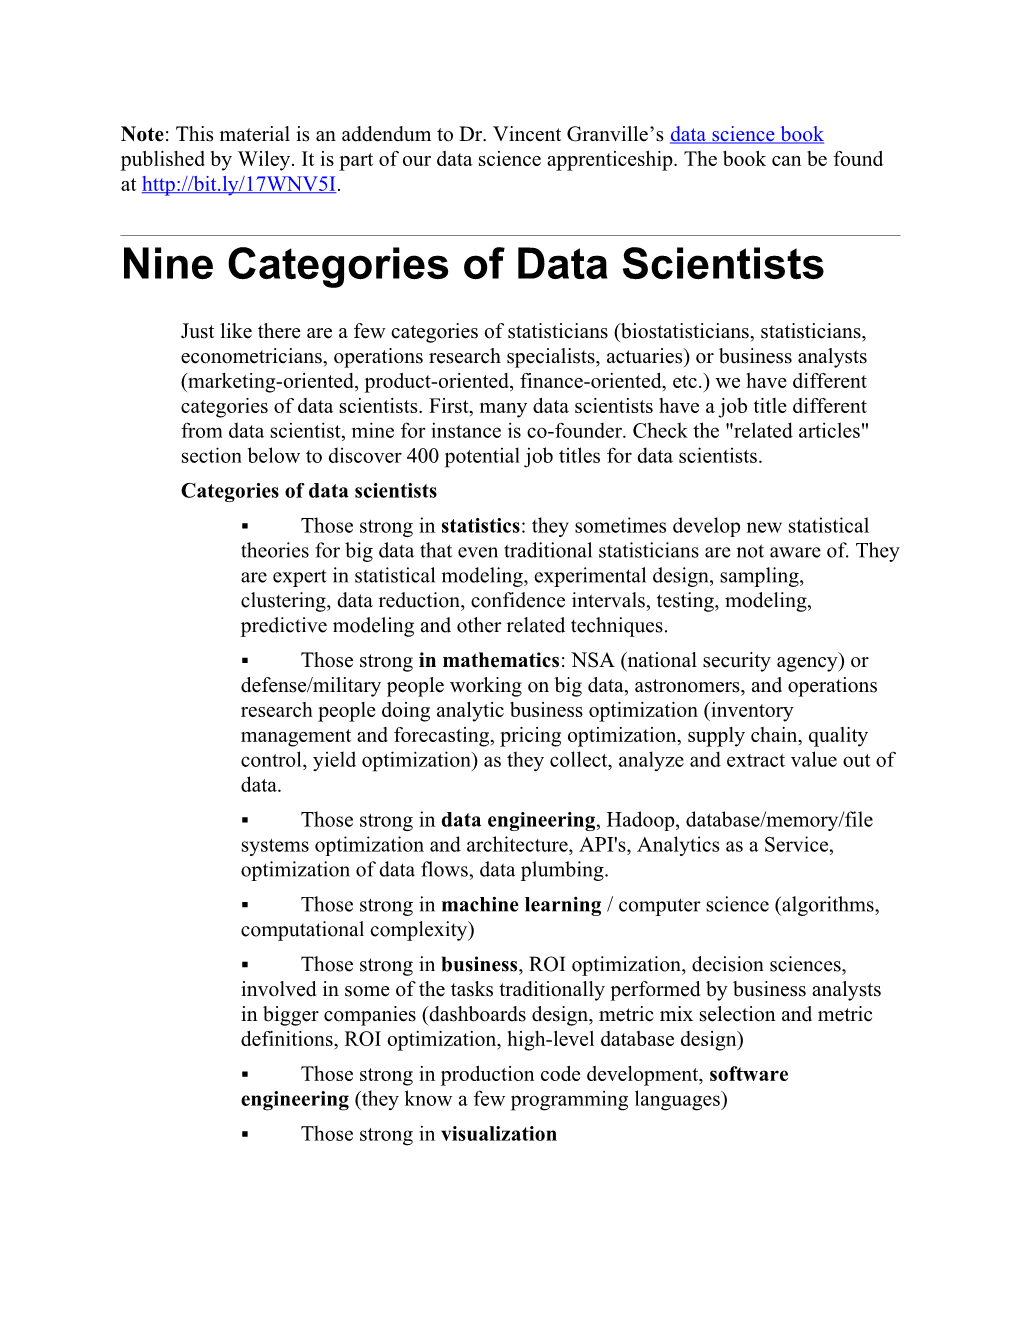 Nine Categories of Data Scientists